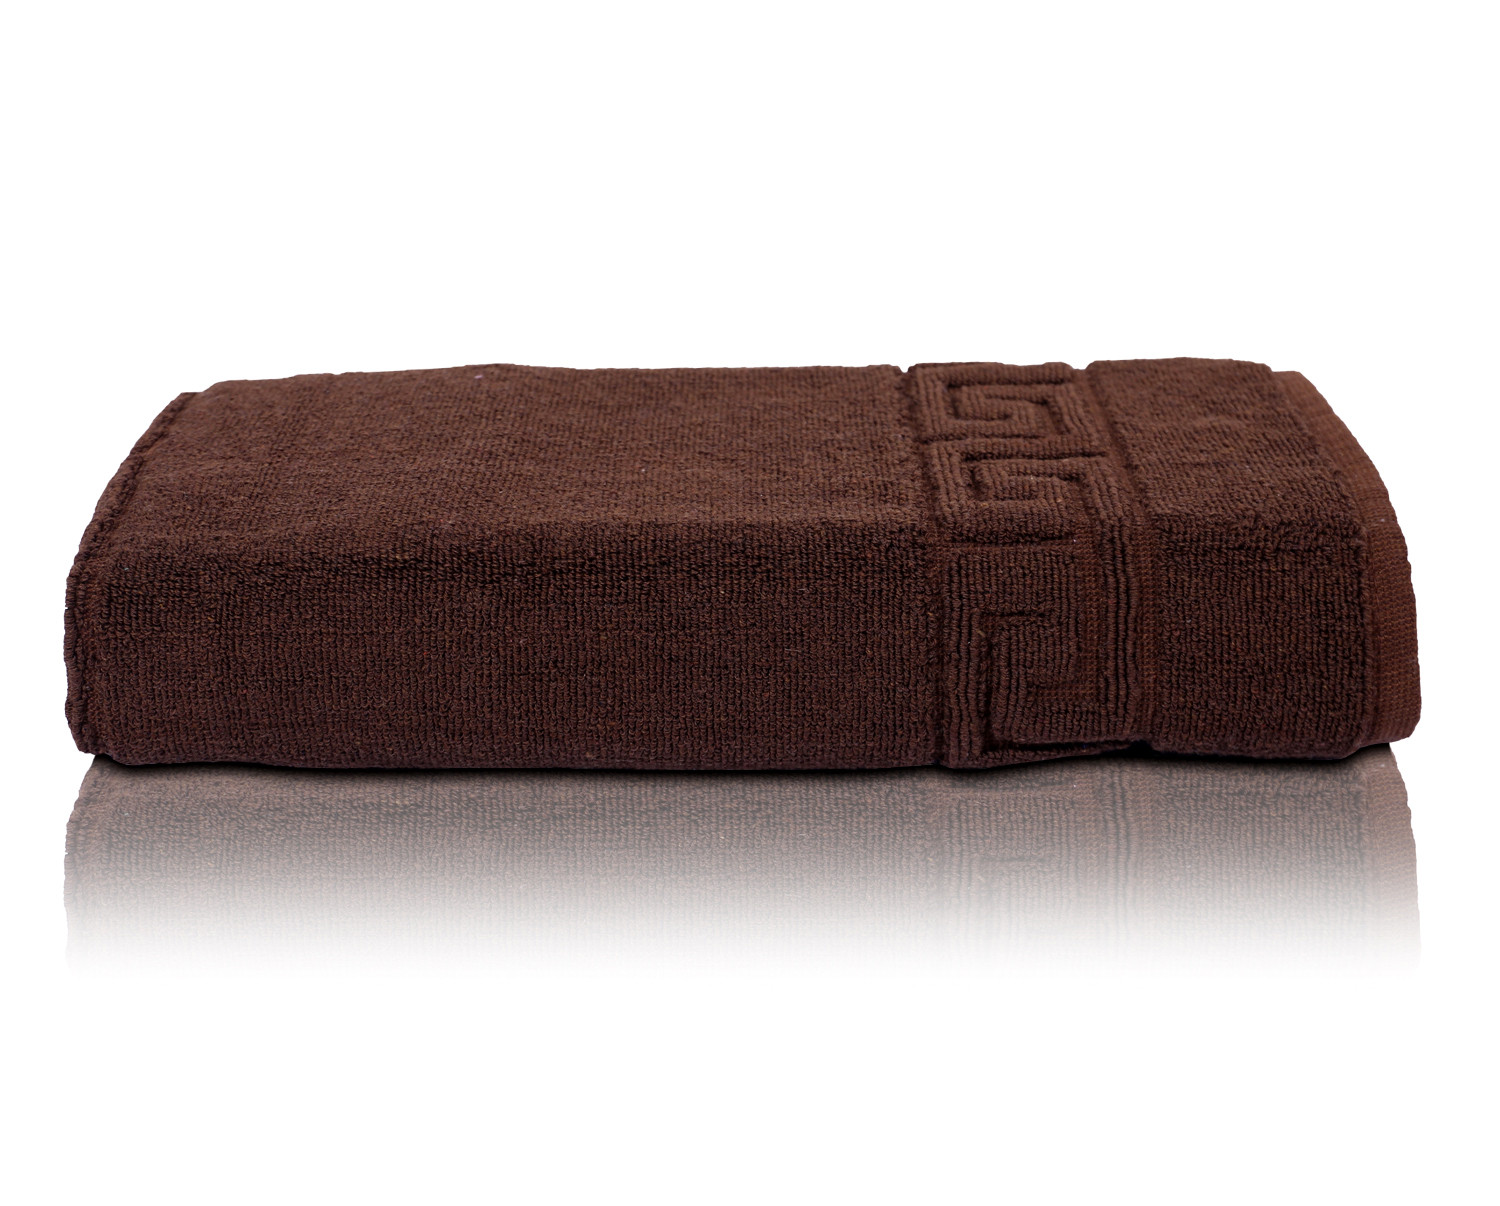 Kuber Industries Greek Design Super Absorbent Cotton 400 GSM Hand Towel|Face Towel|Bath Nets for Men,Women,Kids,30x20 Inches,(Brown)